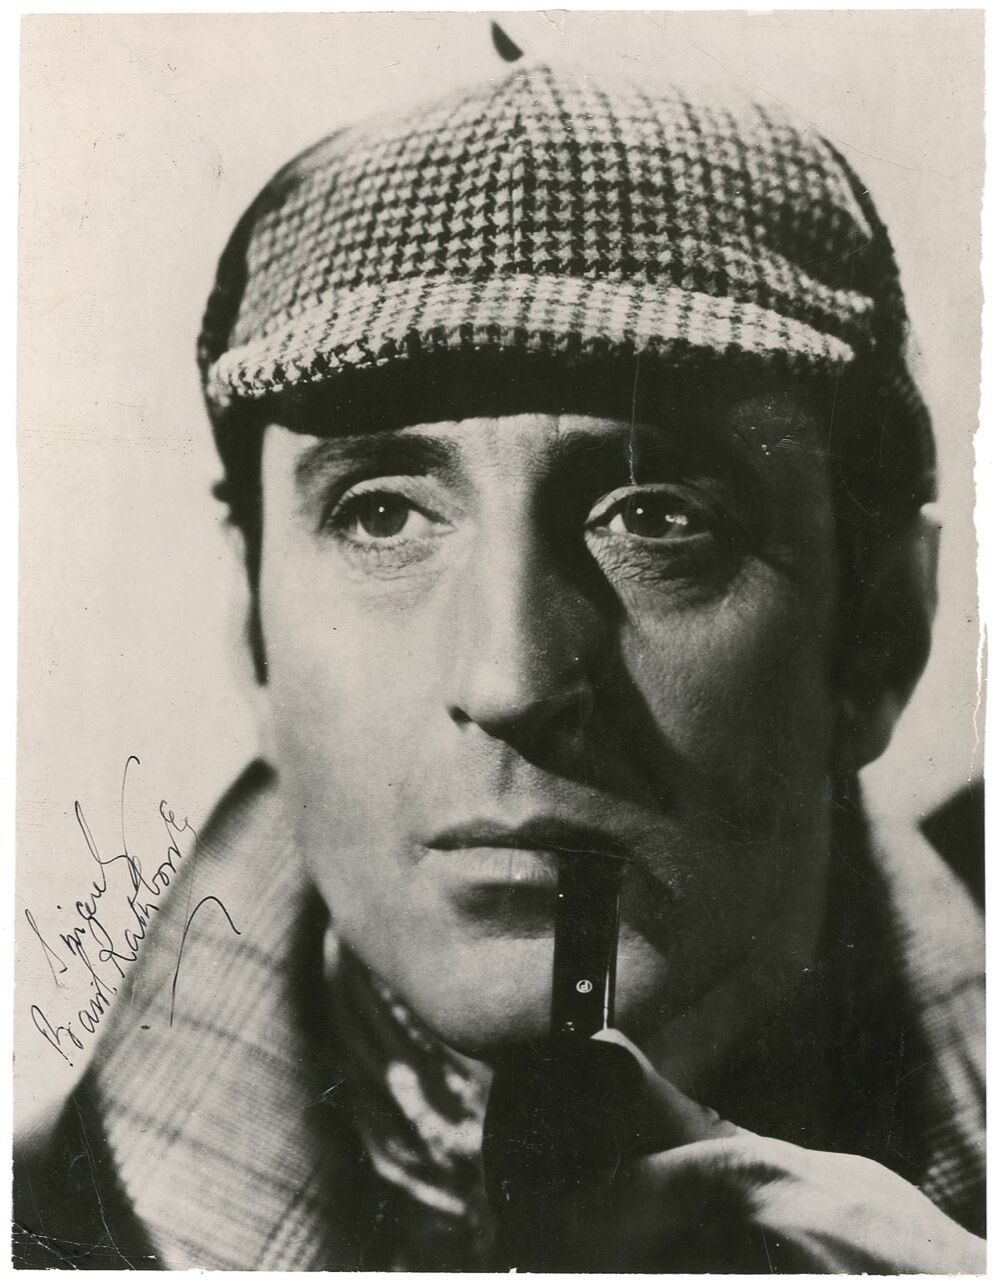 BASIL RATHBONE Signed Photo Poster paintinggraph - Film Star Actor as Sherlock Holmes preprint